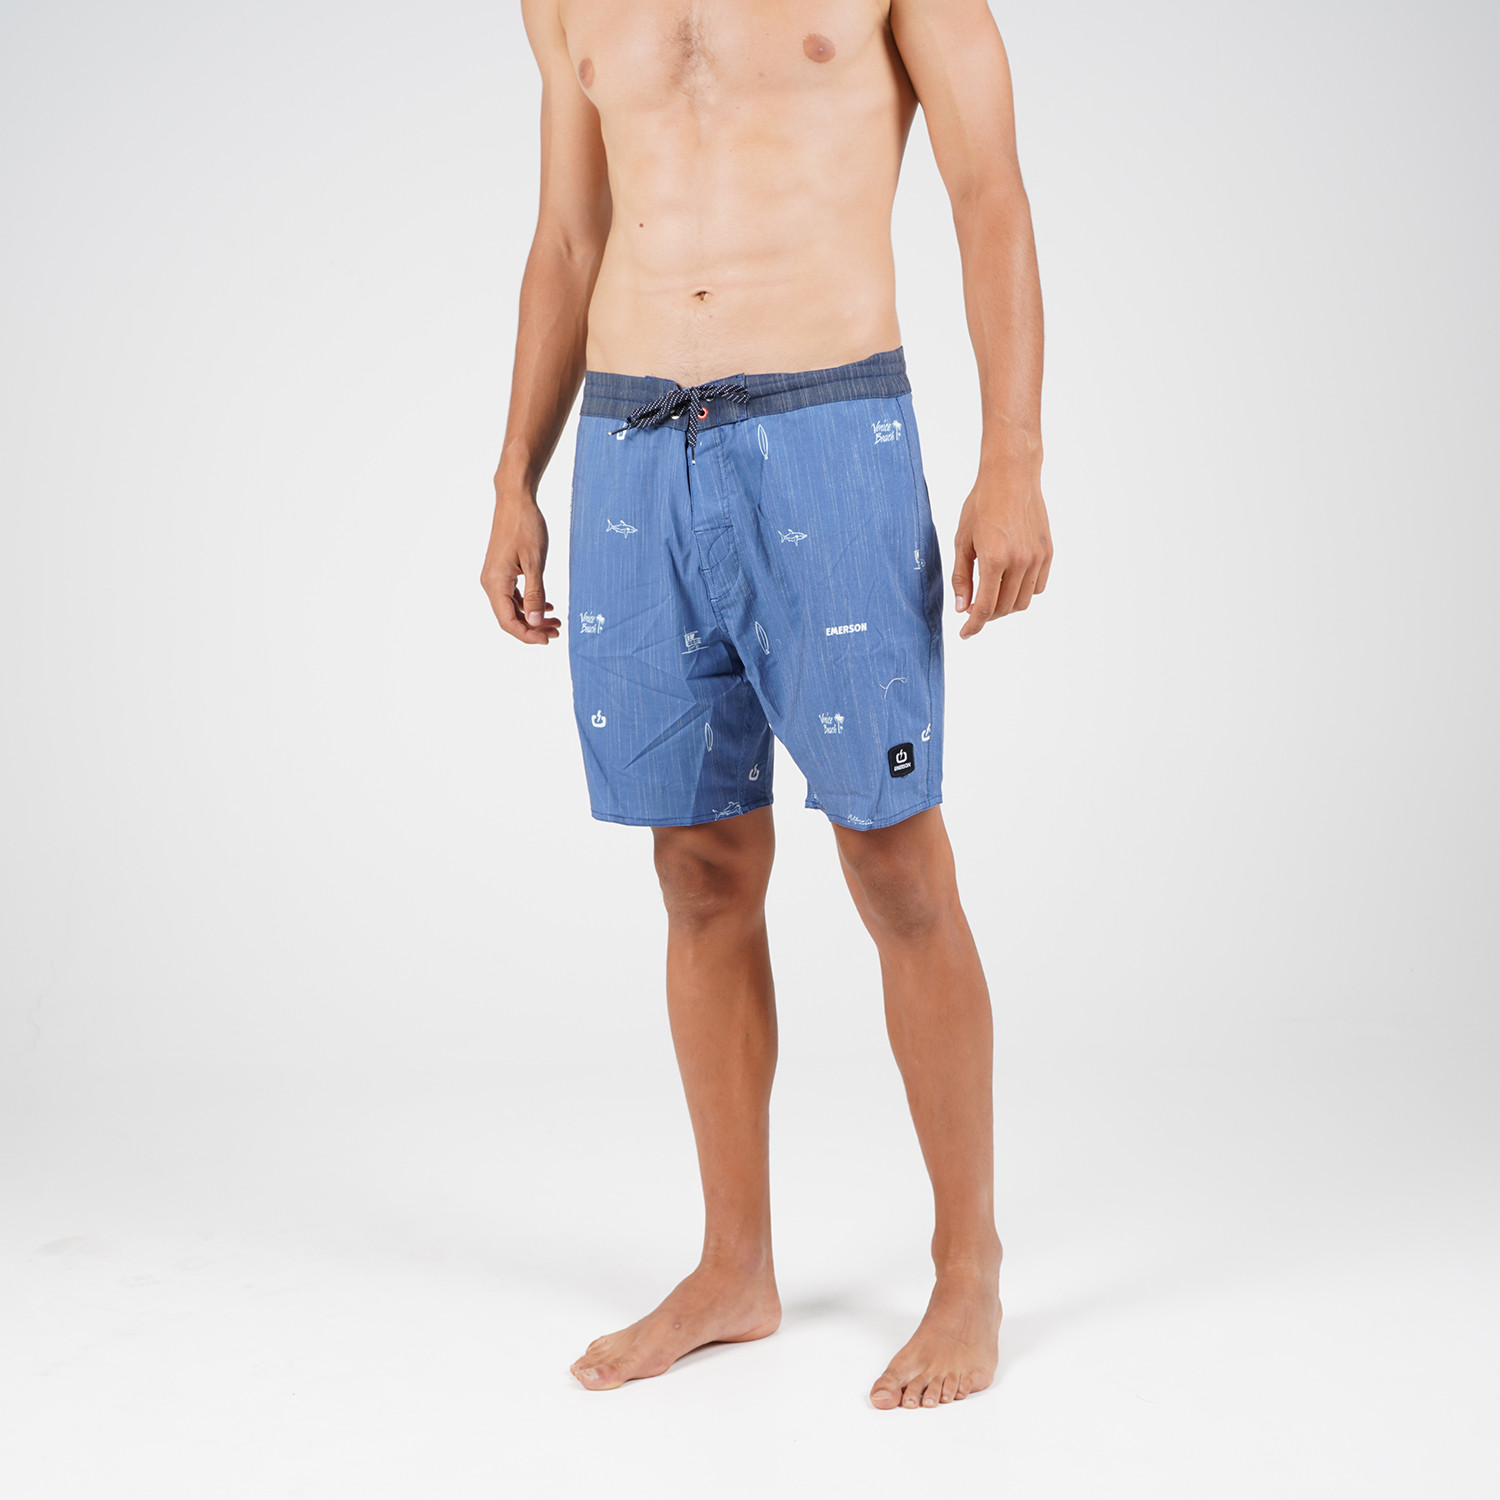 Emerson Men's Packable Board Shorts (9000048643_43931)